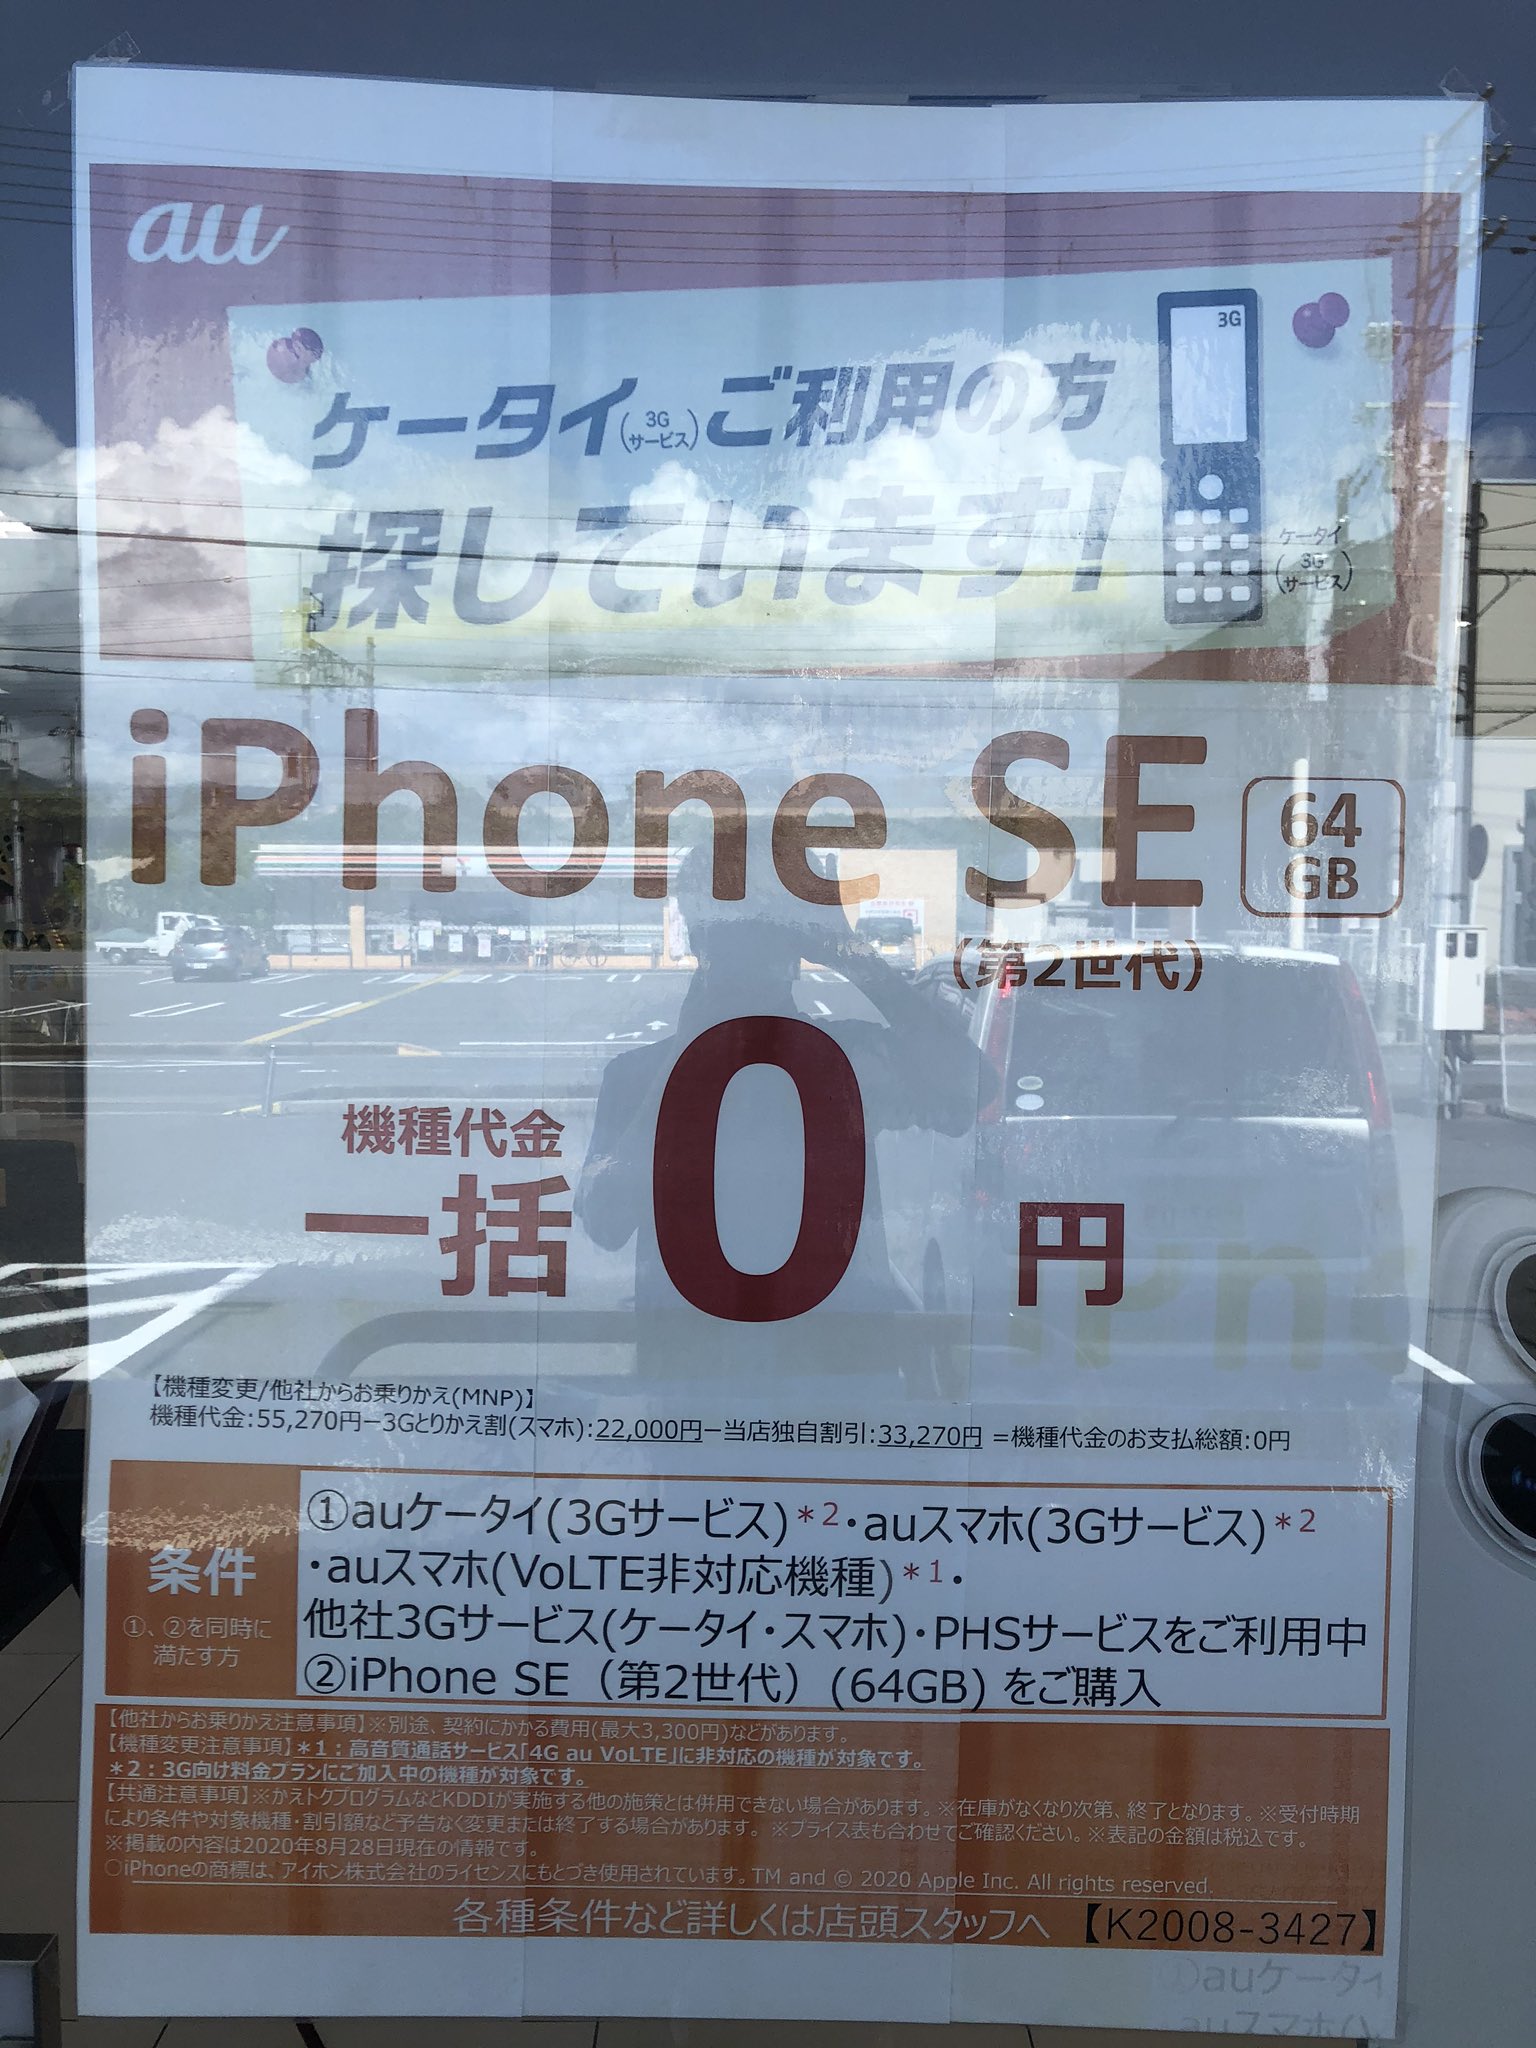 Au Iphone Se2 64gb Mnp一括0円 特価情報 関西 大阪 スマートフォン総合情報ブログ 携帯ナビゲーター野郎